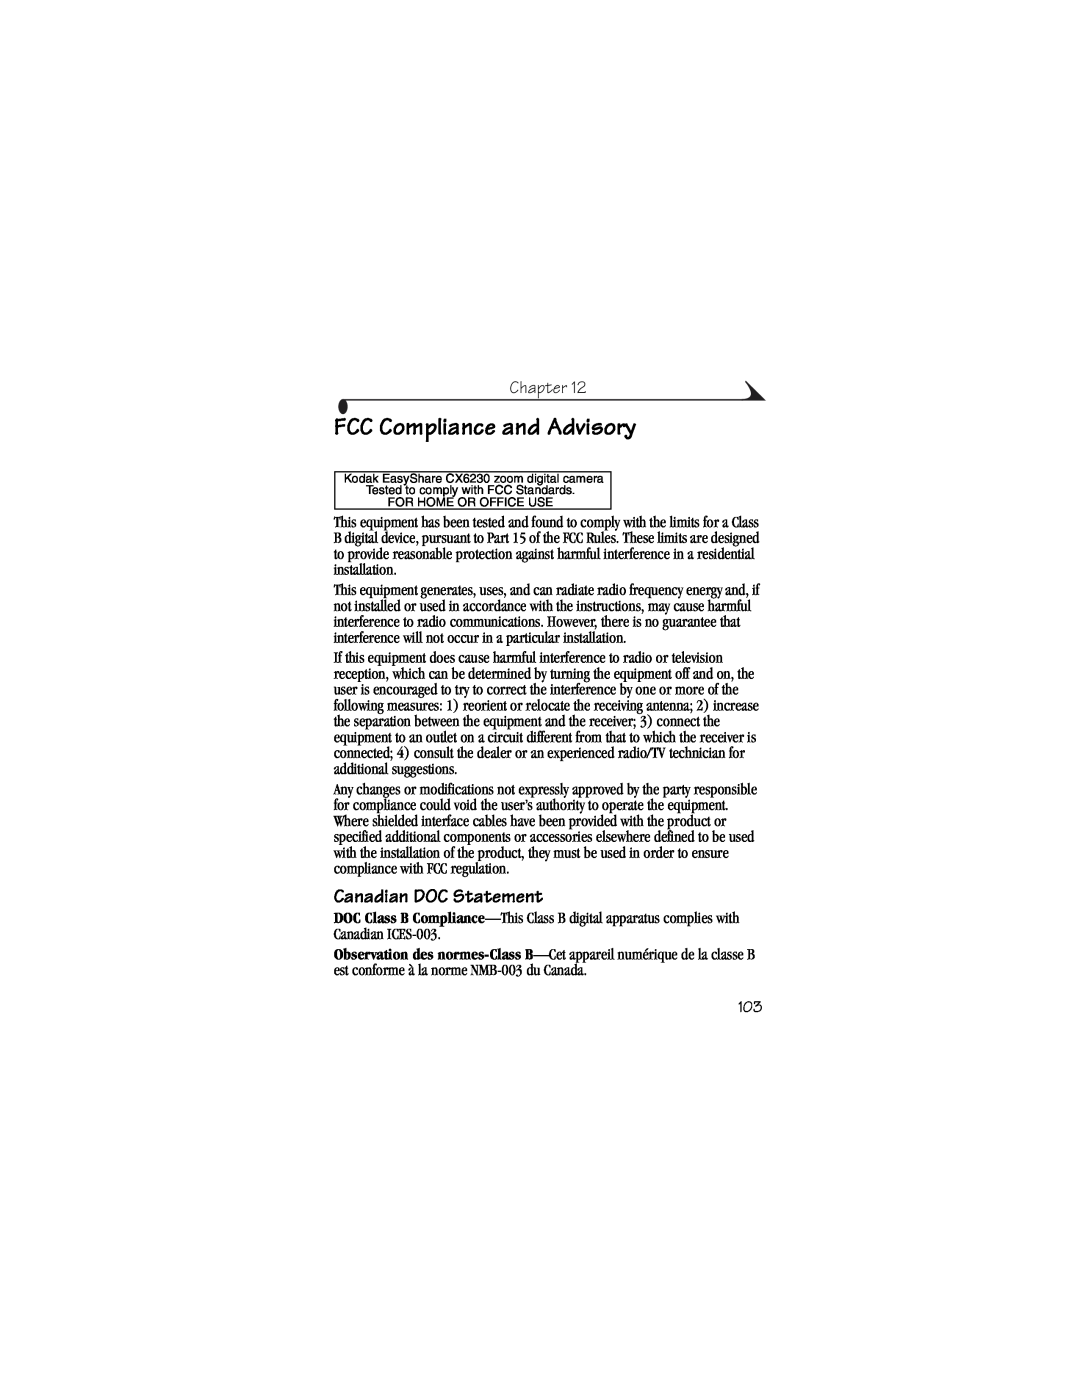 Kodak CX6230 manual FCC Compliance and Advisory, Canadian DOC Statement, Chapter 